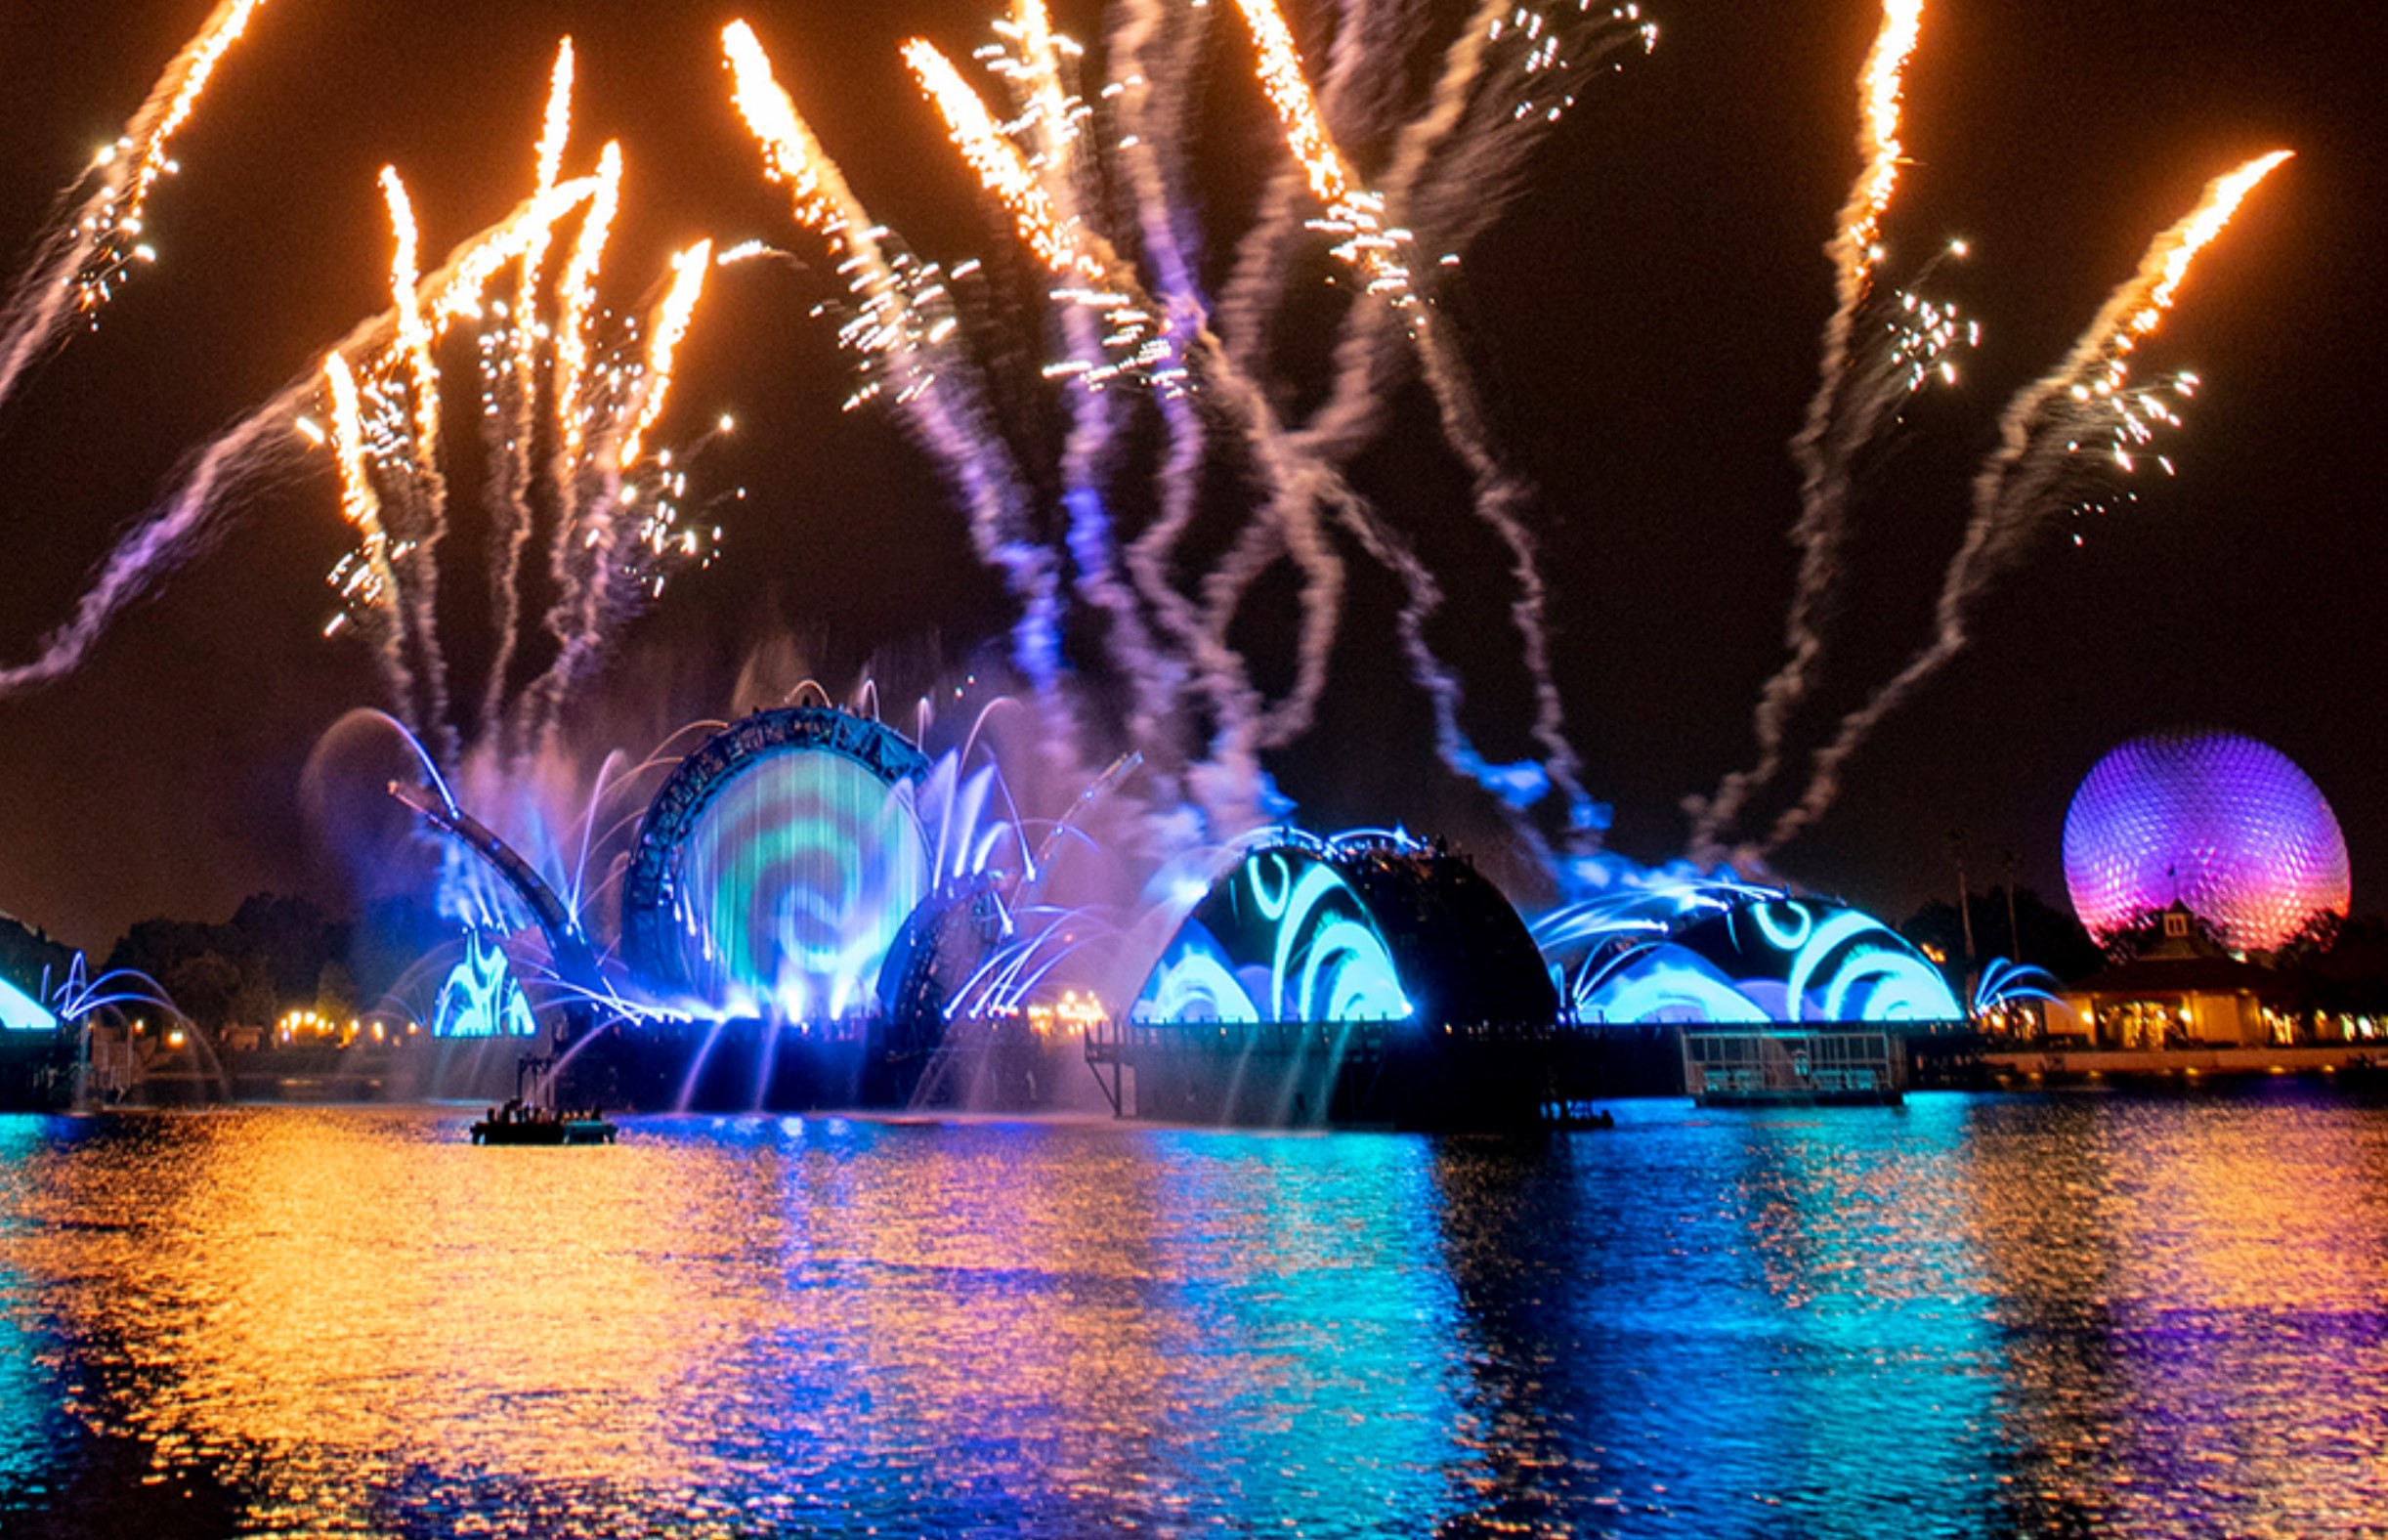 7983Harmonious new nighttime spectacular fireworks show – Epcot’s World Showcase Lagoon at Disney – 2021